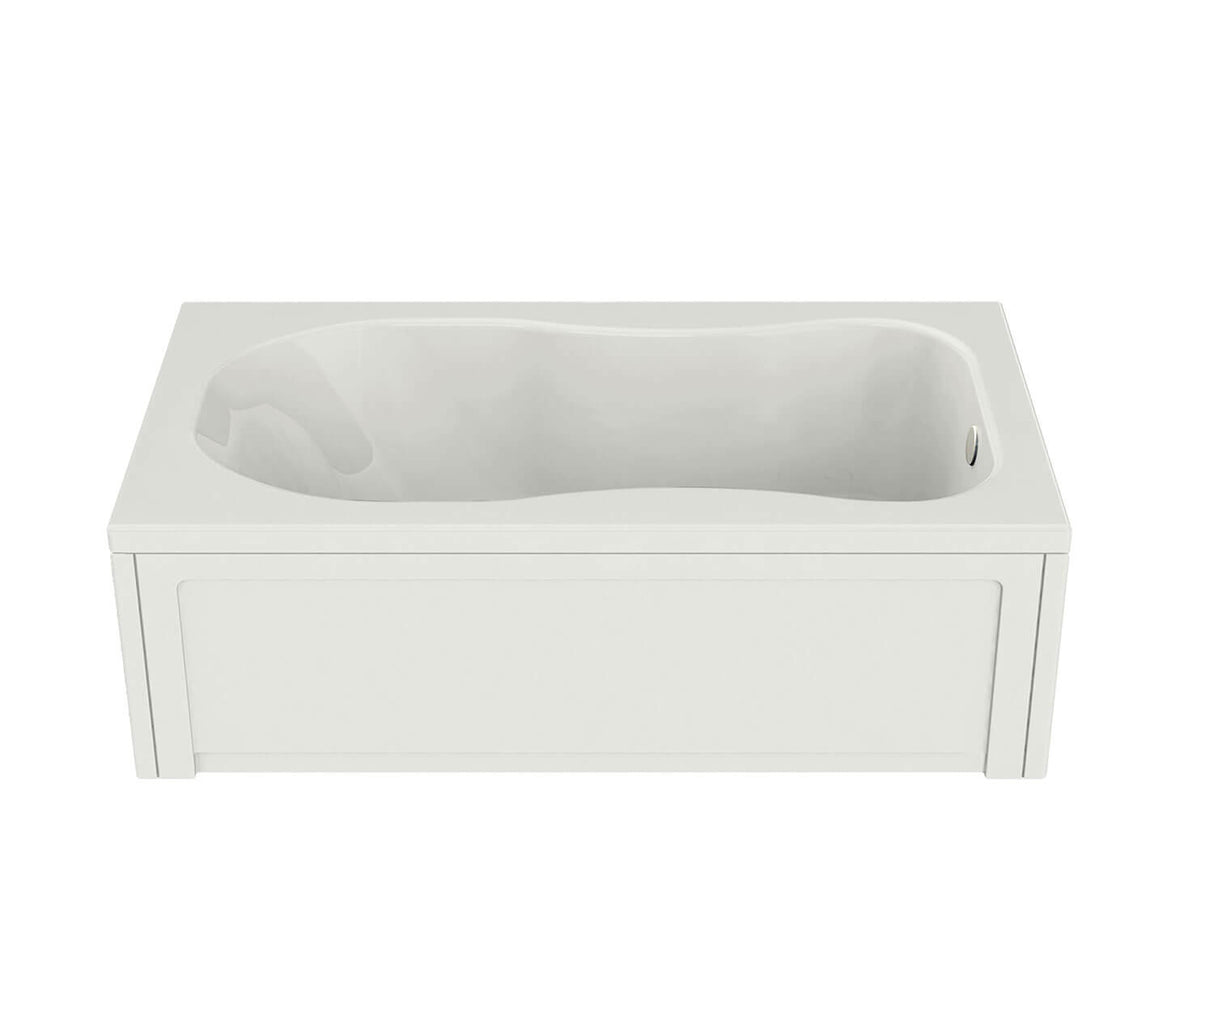 MAAX 101055-000-001-000 Topaz 6036 Acrylic Alcove End Drain Bathtub in White